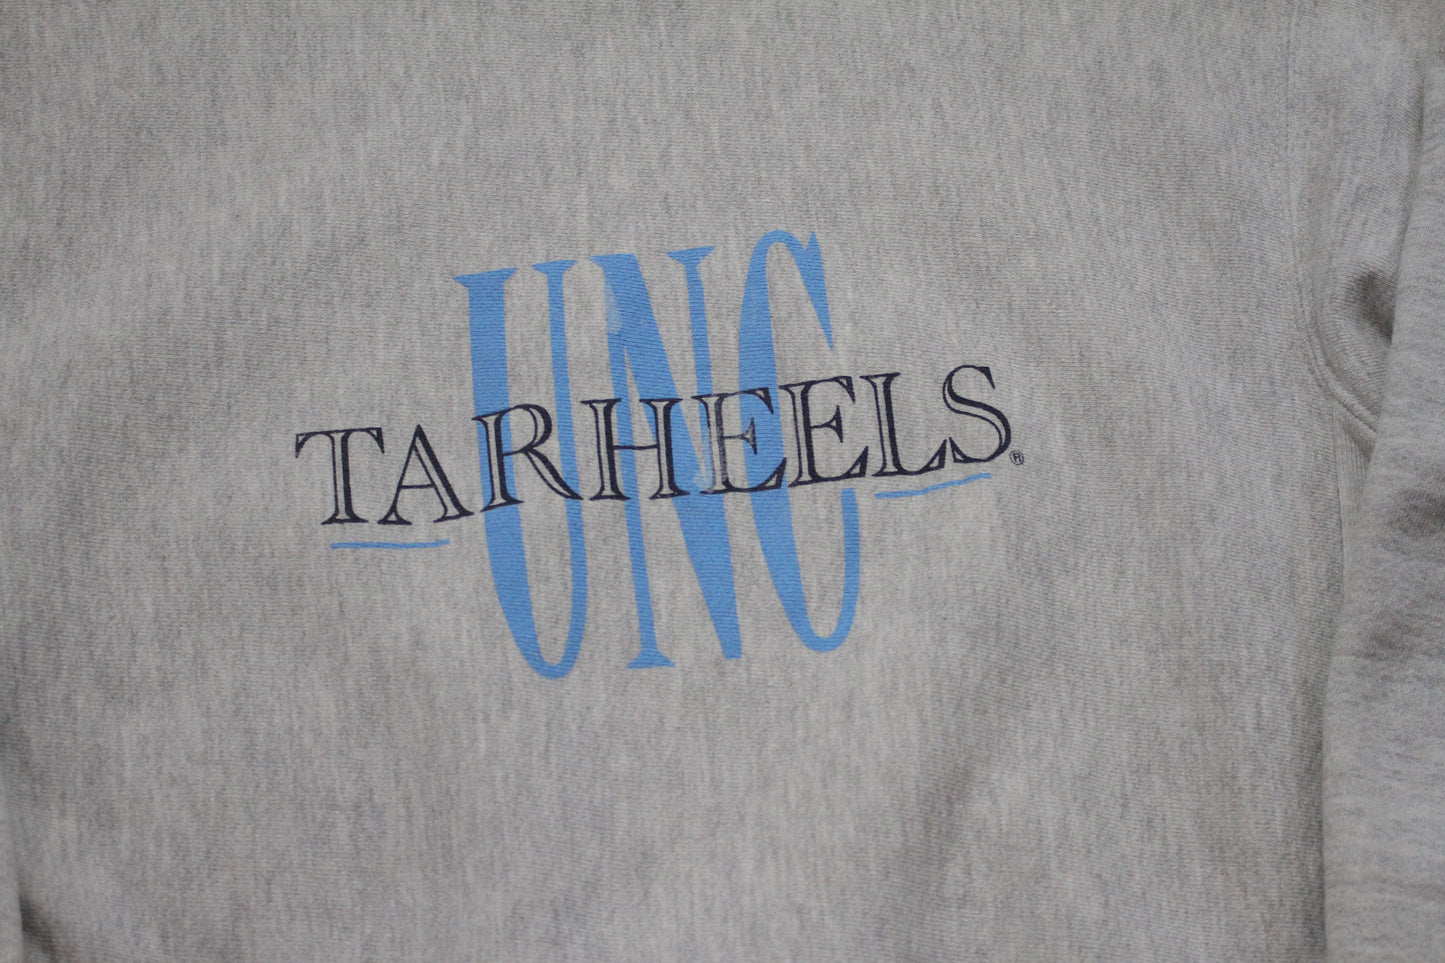 1980s/1990s Rugged Sweats UNC University of North Carolina Tar Heels Reverse Weave Style Sweatshirt Made in USA Size L